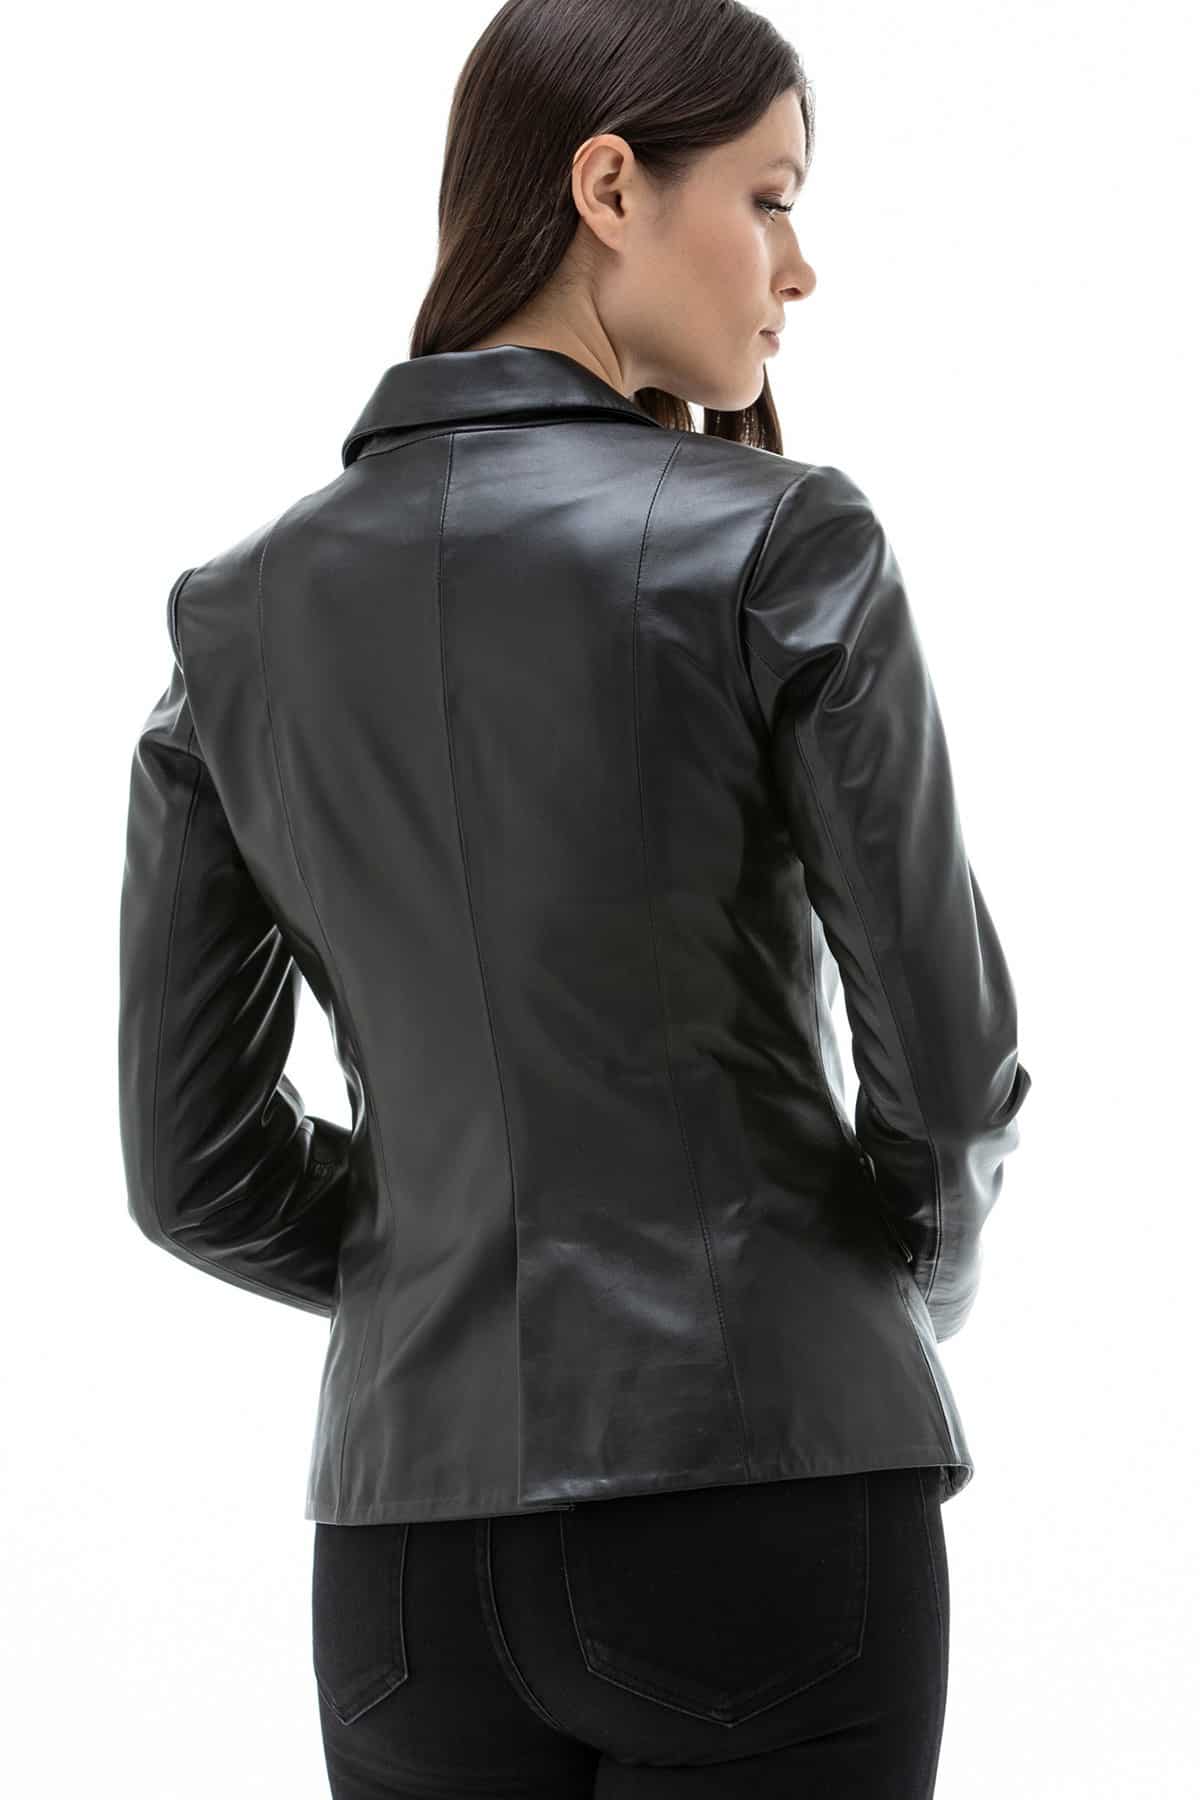 Sydney Black Ladies Smart Collared Designer Real Lambskin Leather Fashion Jacket 